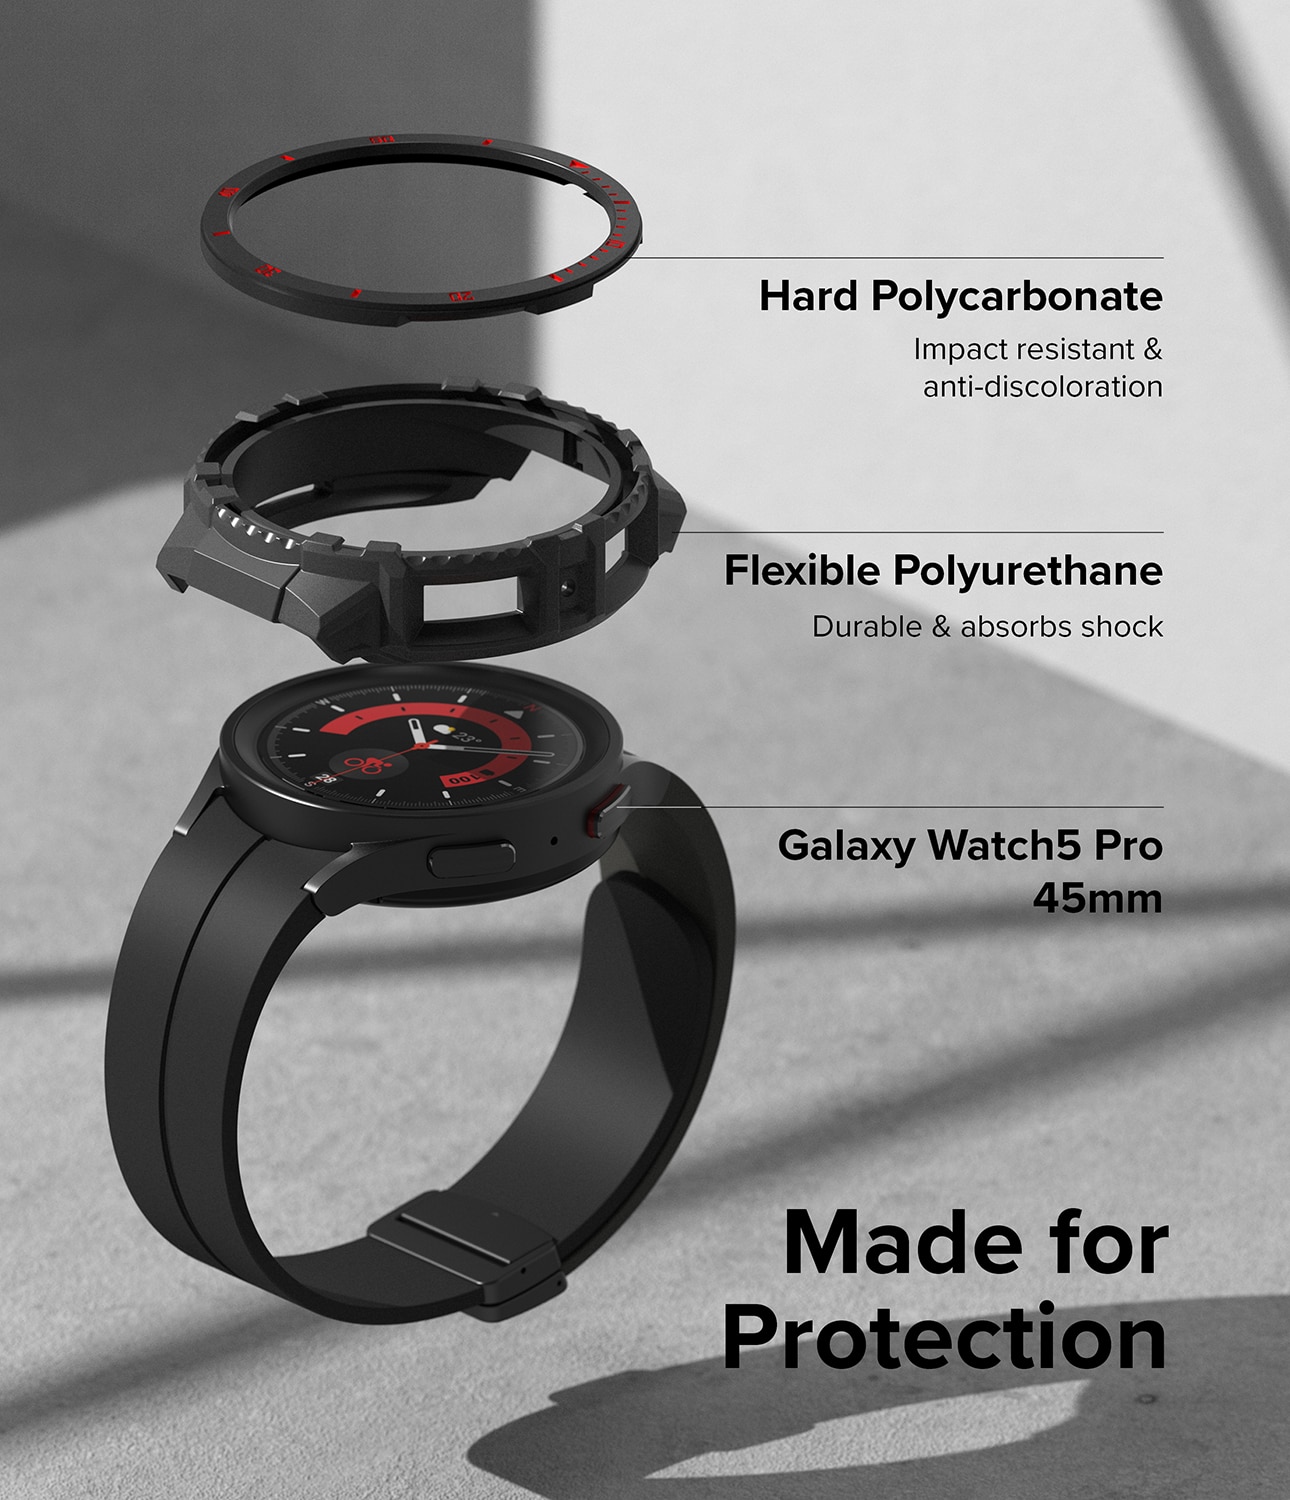 Fusion X Case Samsung Galaxy Watch 5 Pro 45mm Black (Red Index)